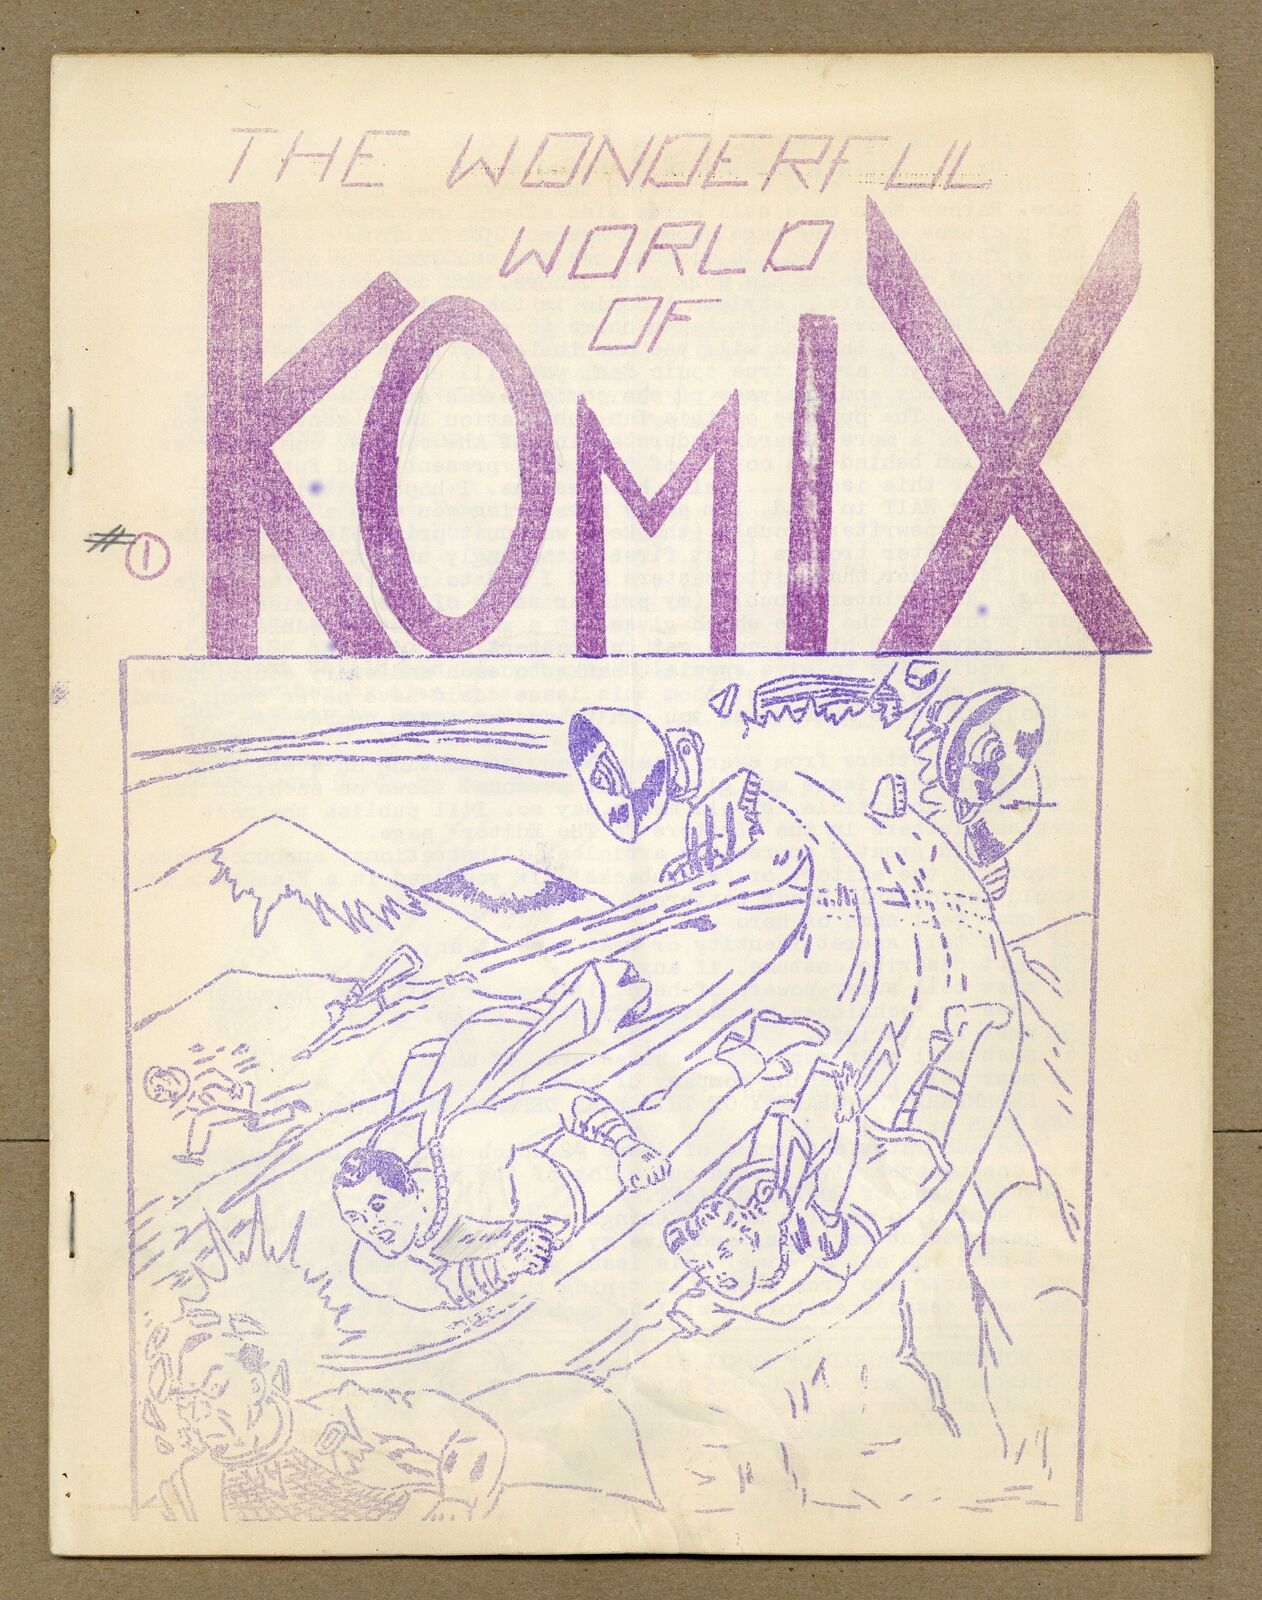 Wonderful World of Komix fanzine #1 FR 1.0 1965